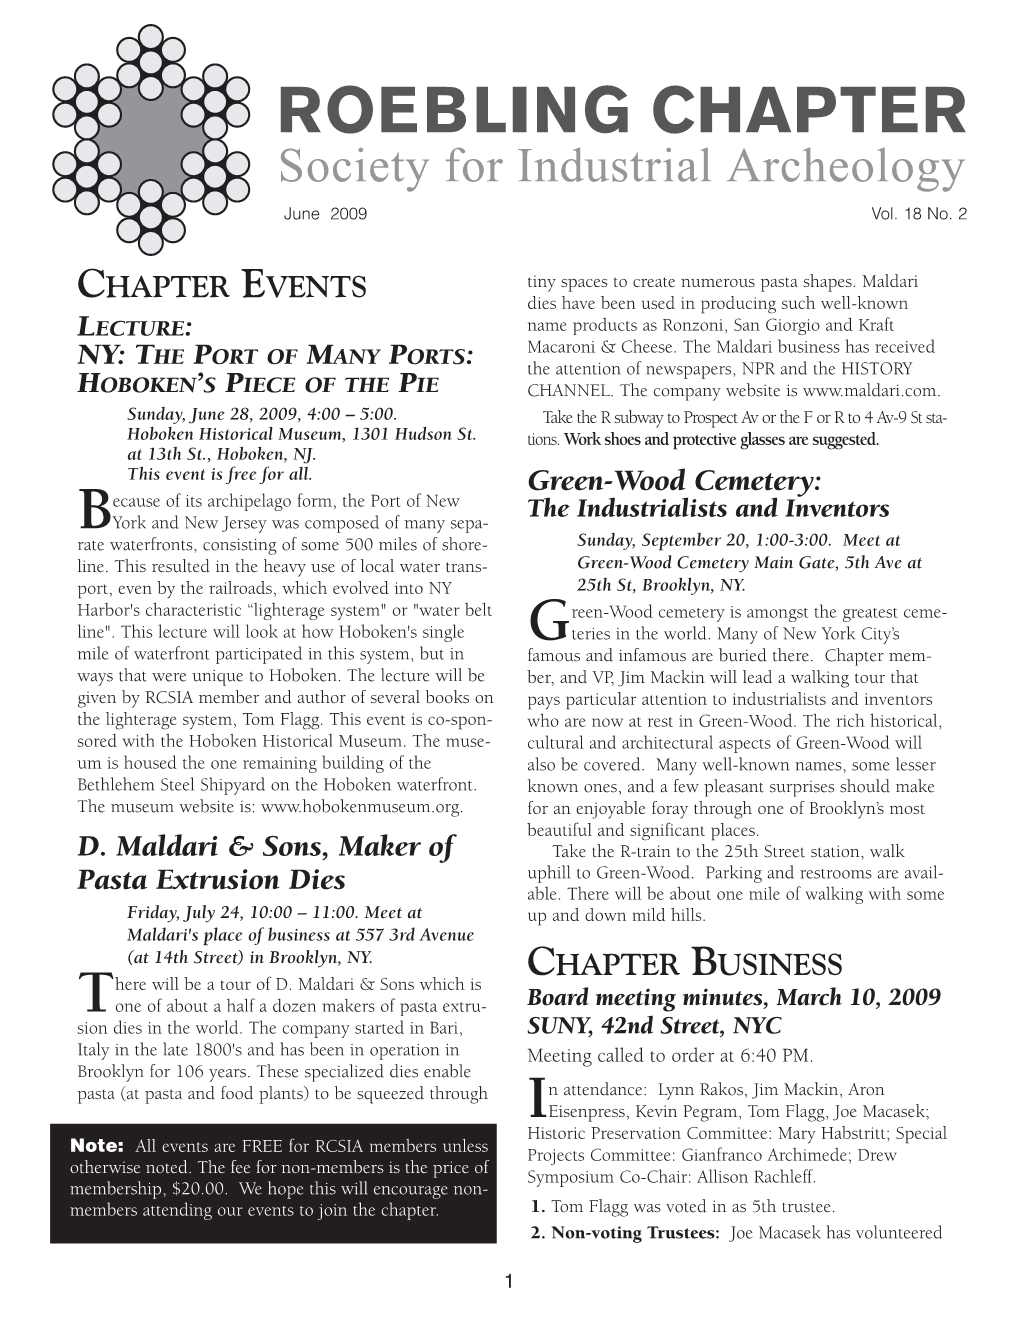 Roebling Chap. Newsletter, Vol. 18, No. 2 June 2009